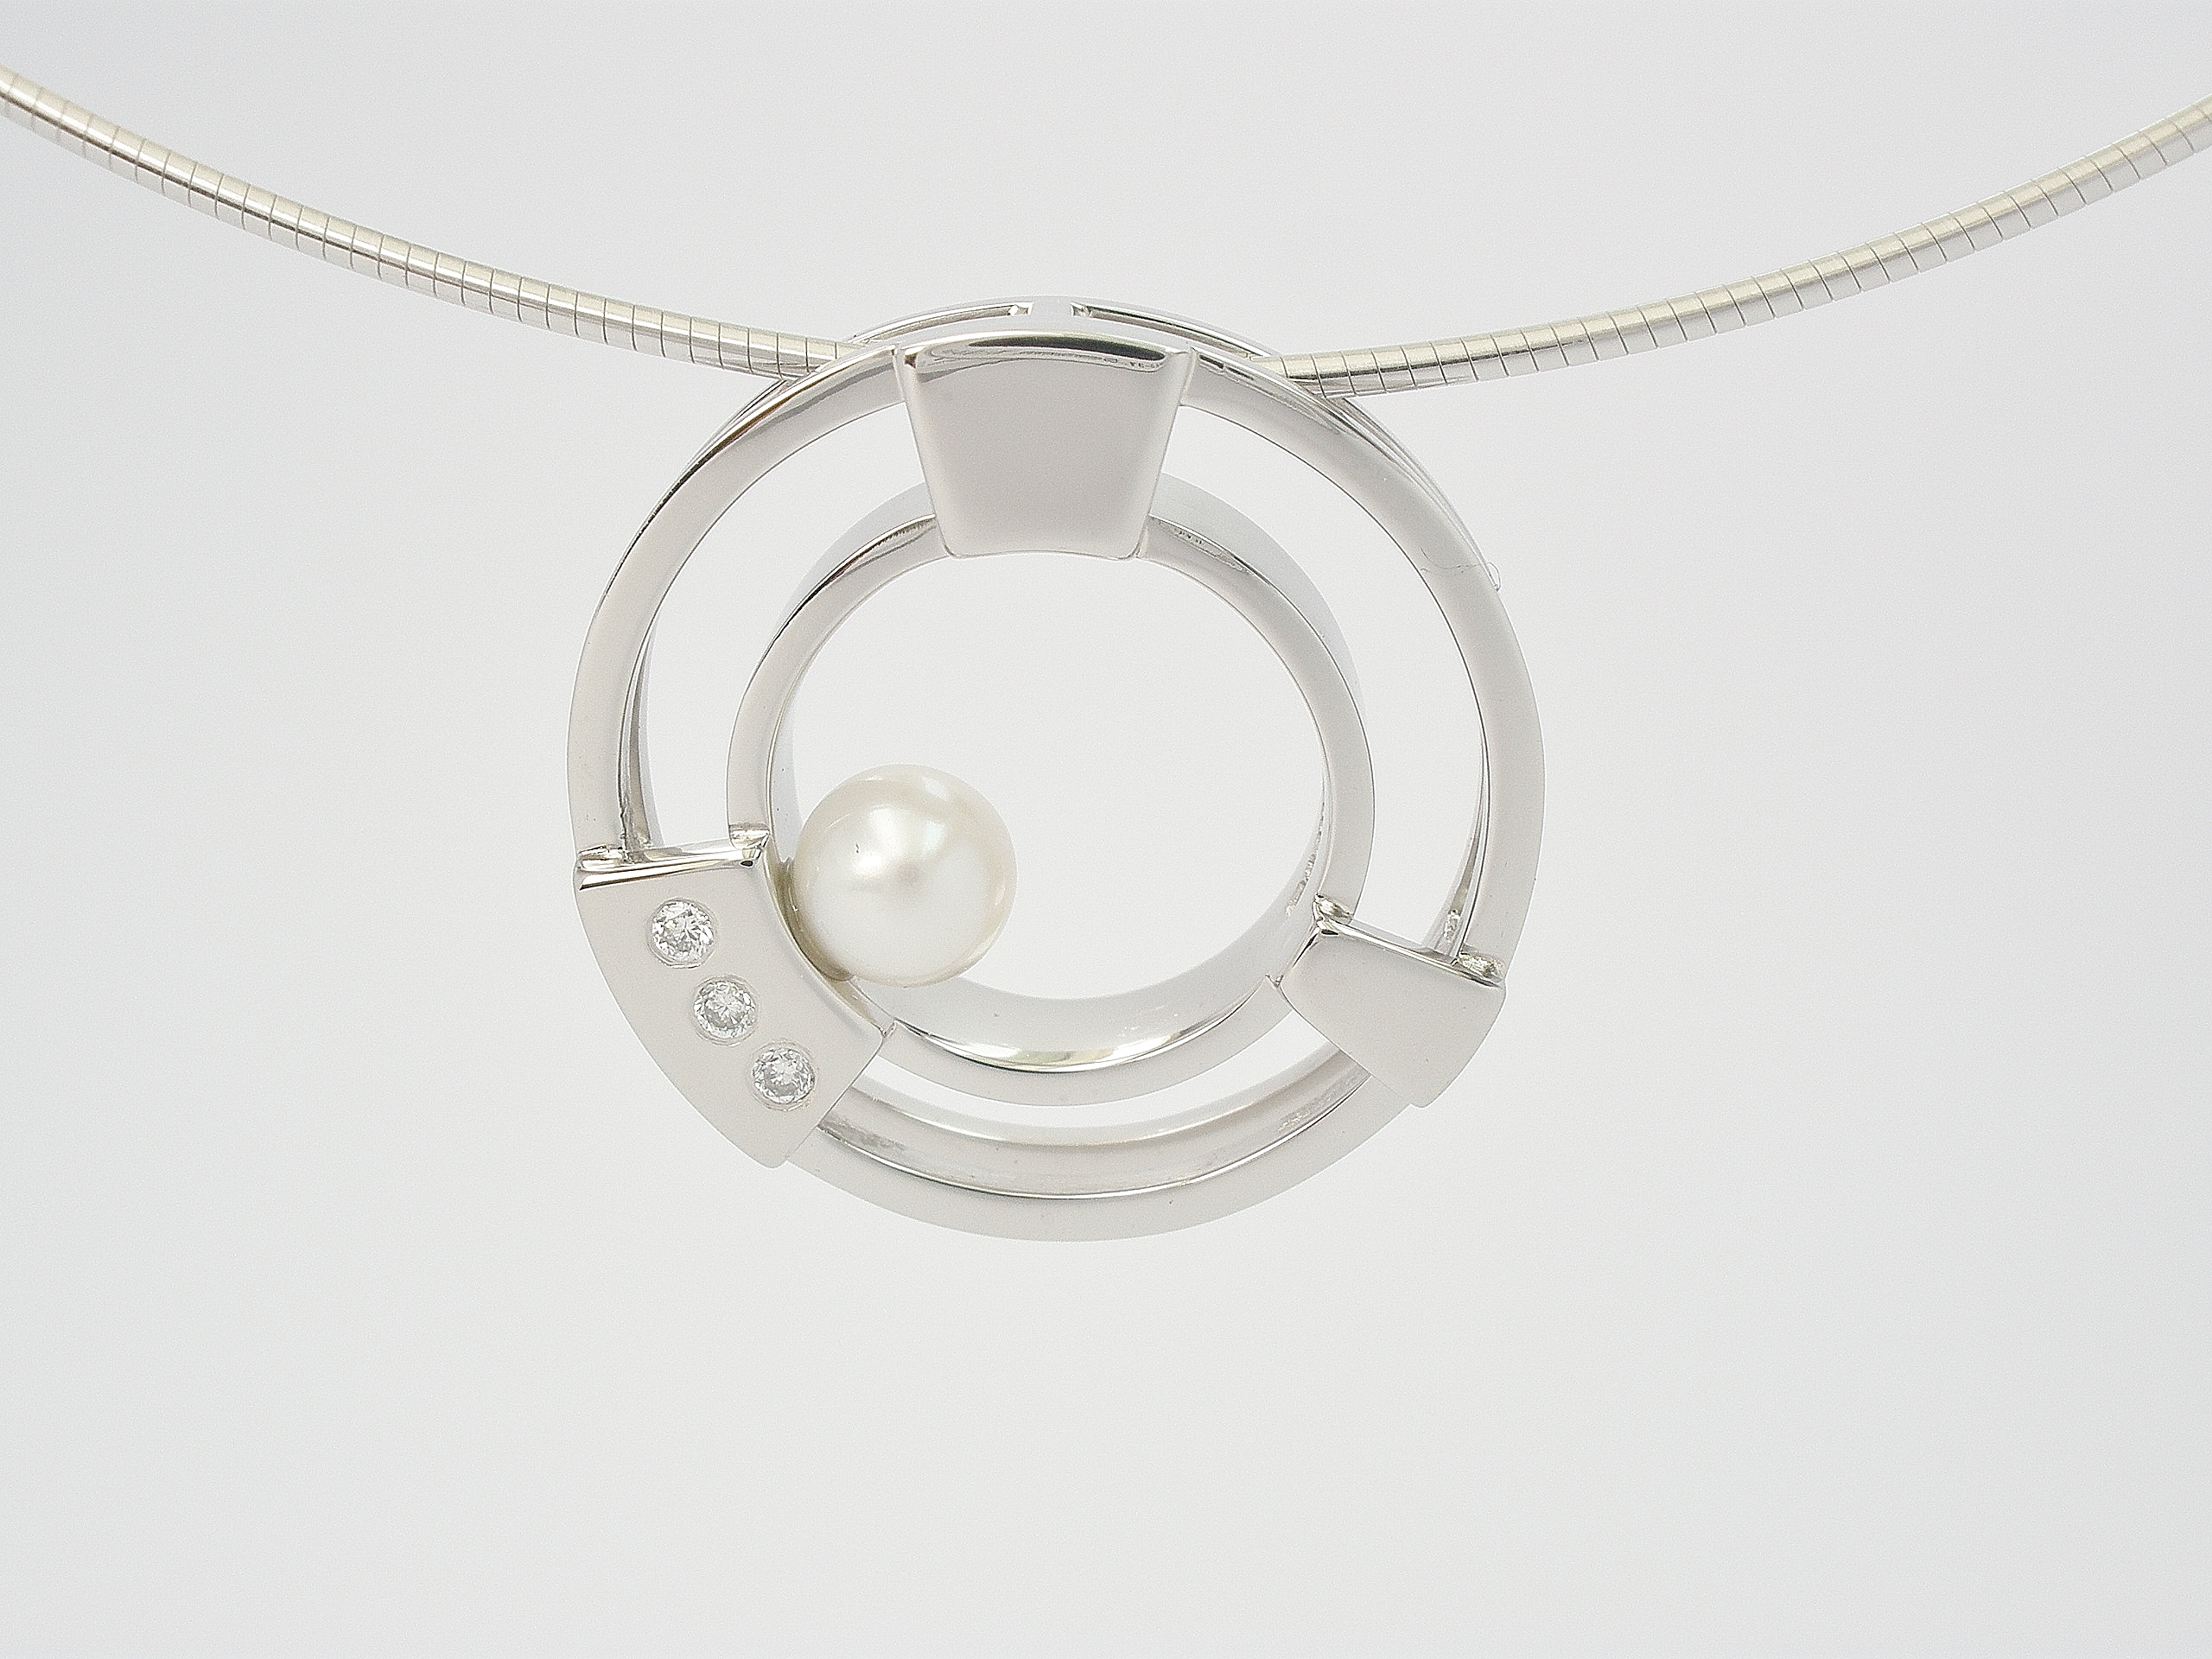 Pearl and diamond palladium double ring, 'polo mint' style pendant.